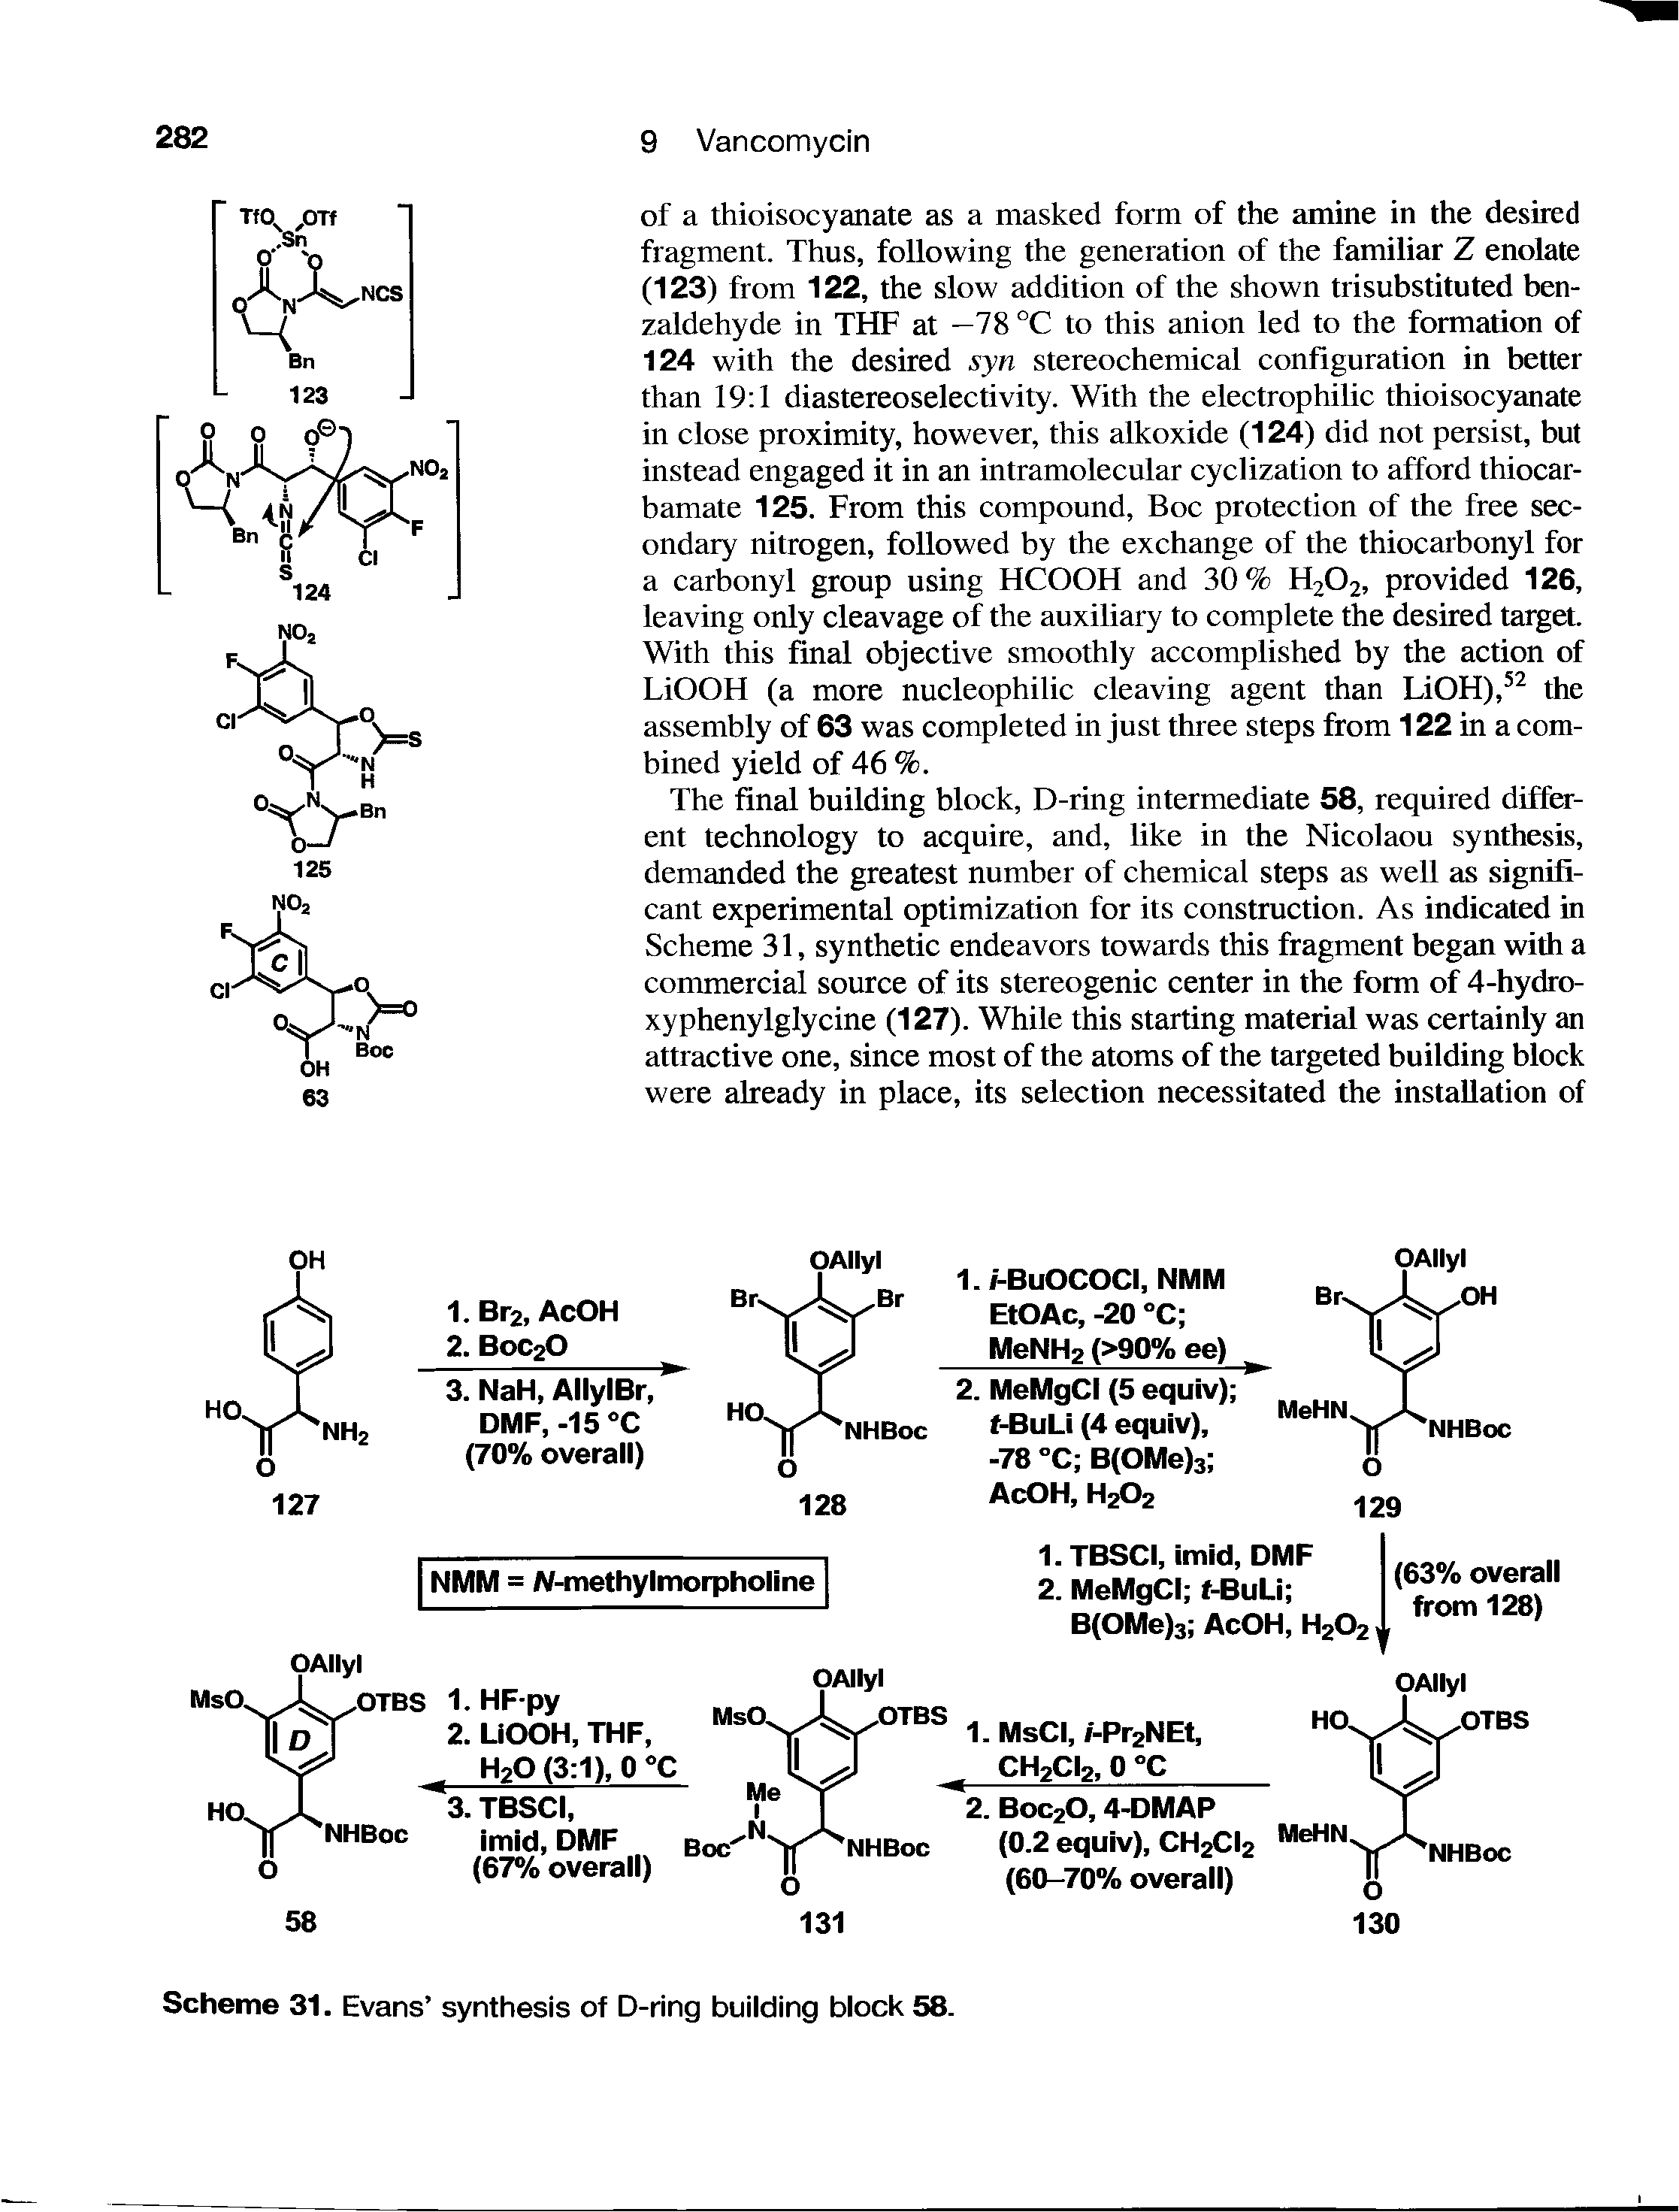 Scheme 31. Evans synthesis of D-ring building block 58.